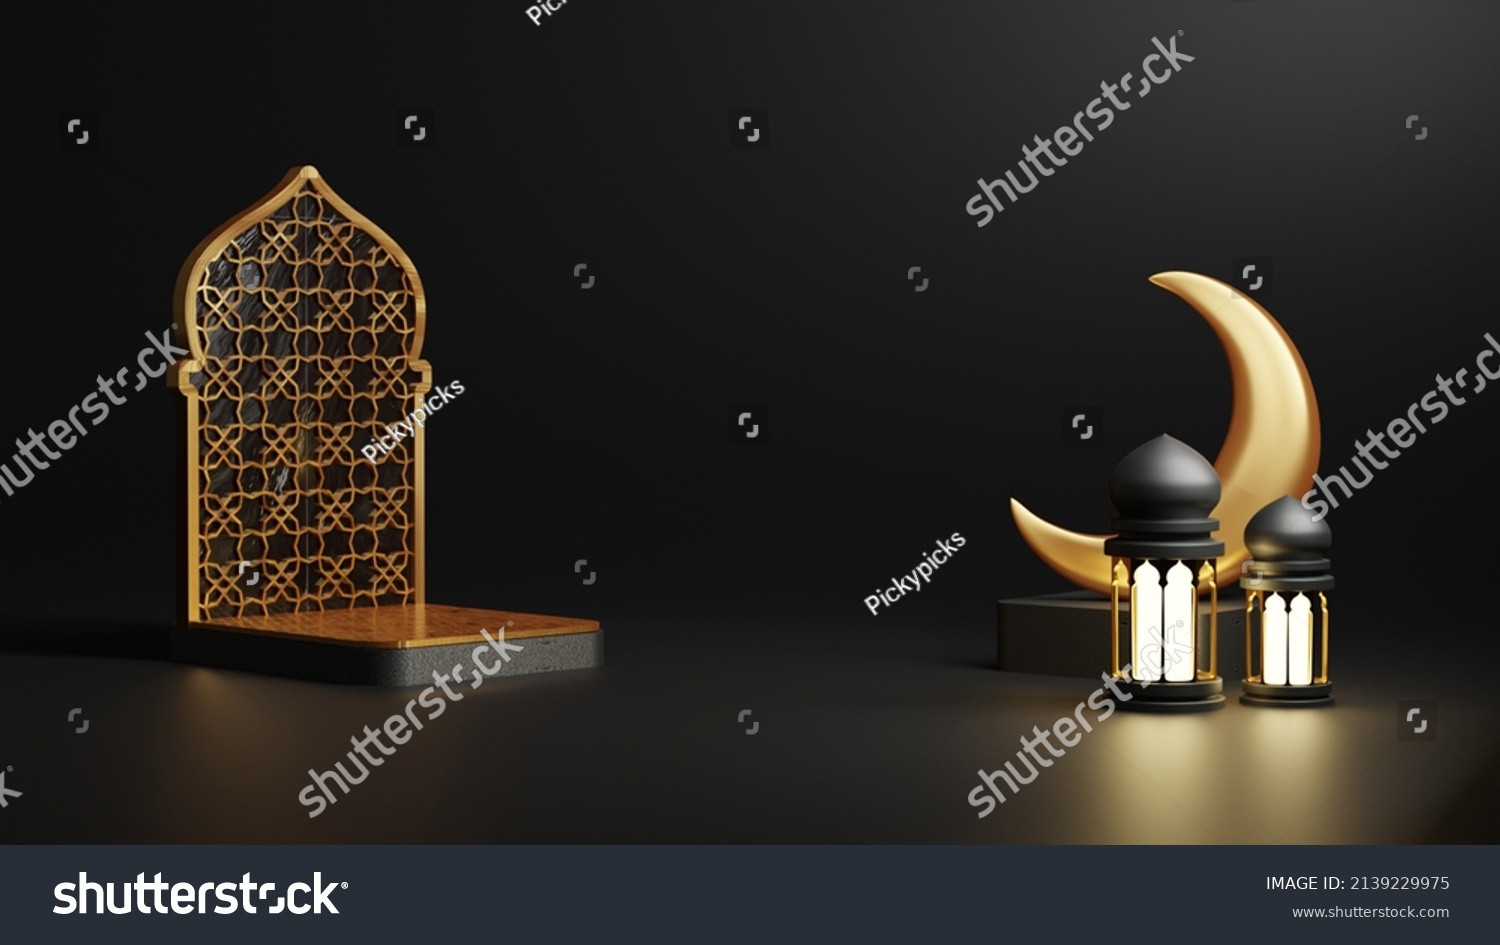 Islamic decoration background with lantern and crescent moon luxury style, ramadan kareem, mawlid, iftar, isra miraj, eid al fitr adha, muharram, copy space text area, 3D illustration. #2139229975